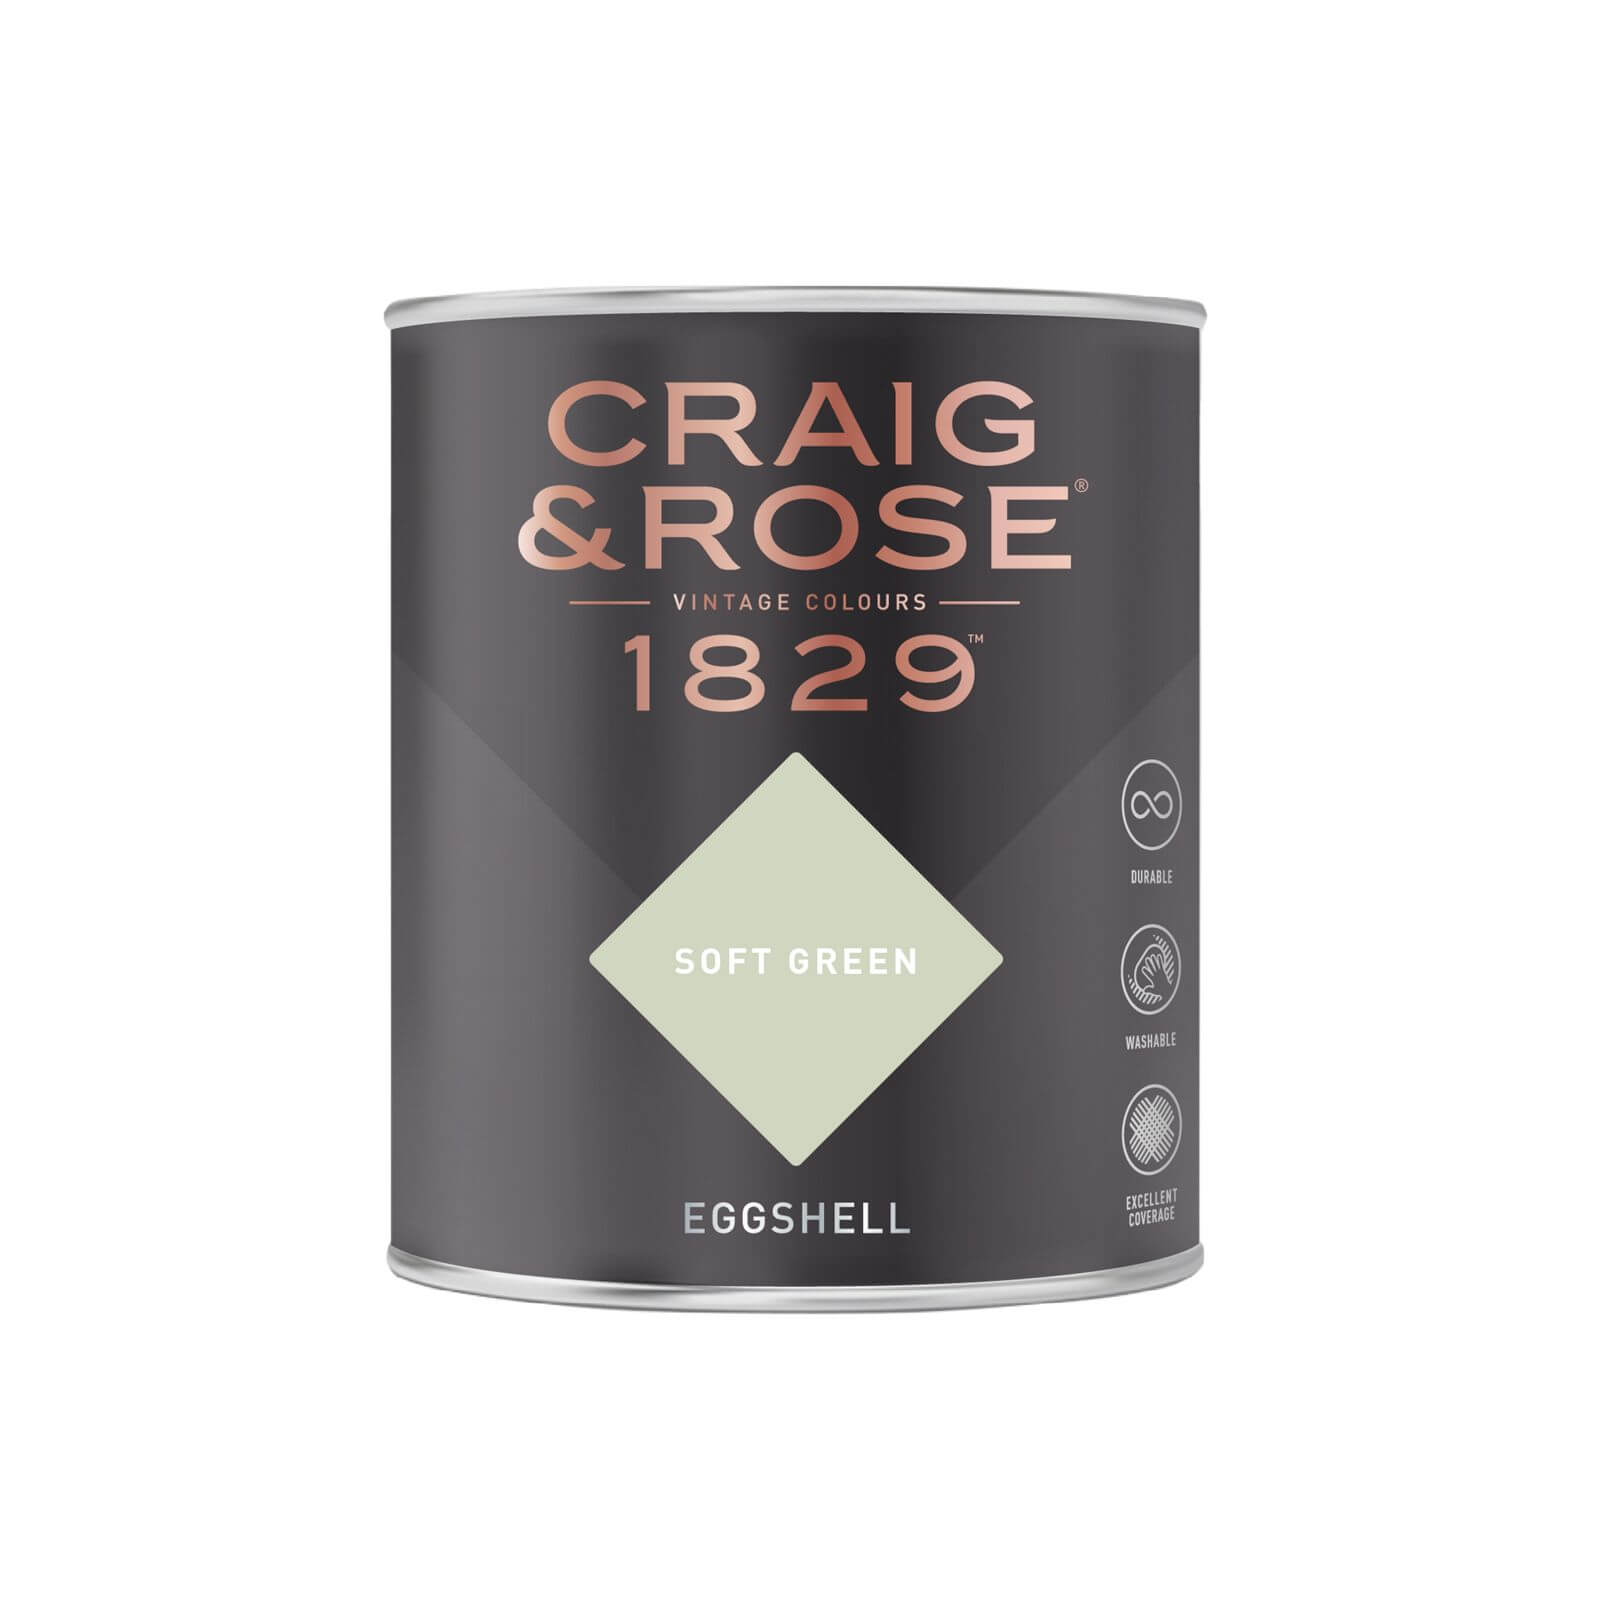 Craig & Rose 1829 Eggshell Paint Soft Green - 750ml